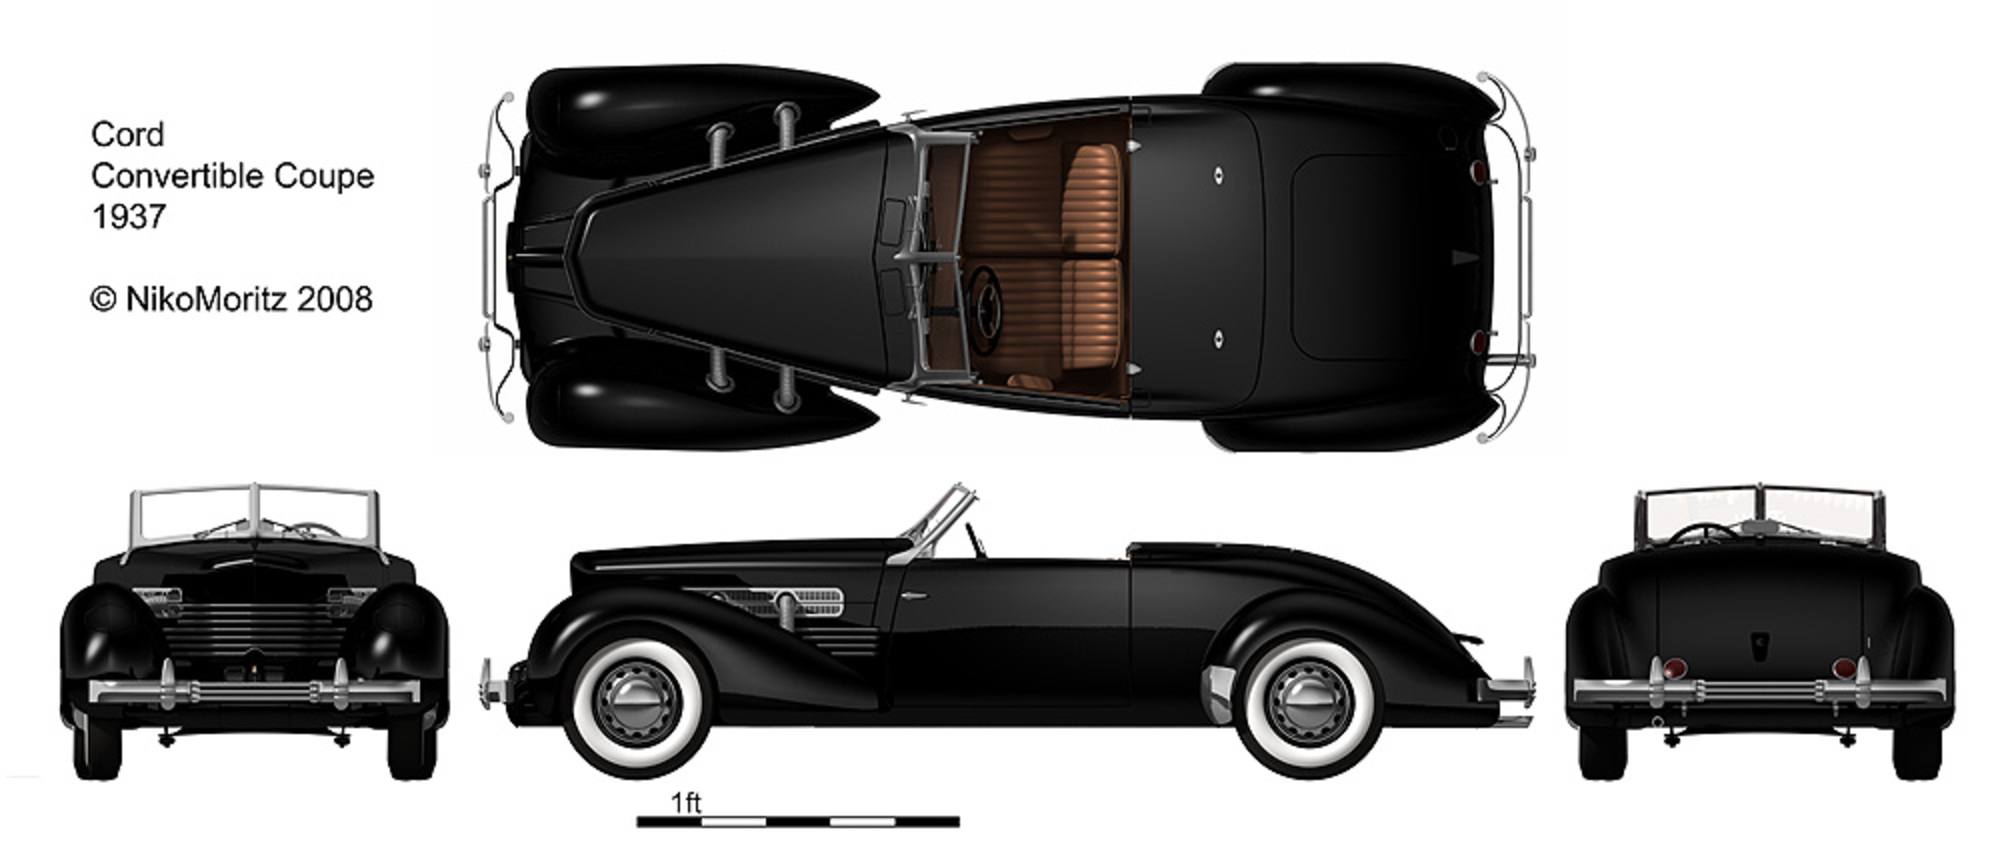 Cord Convertible Coupe 1937